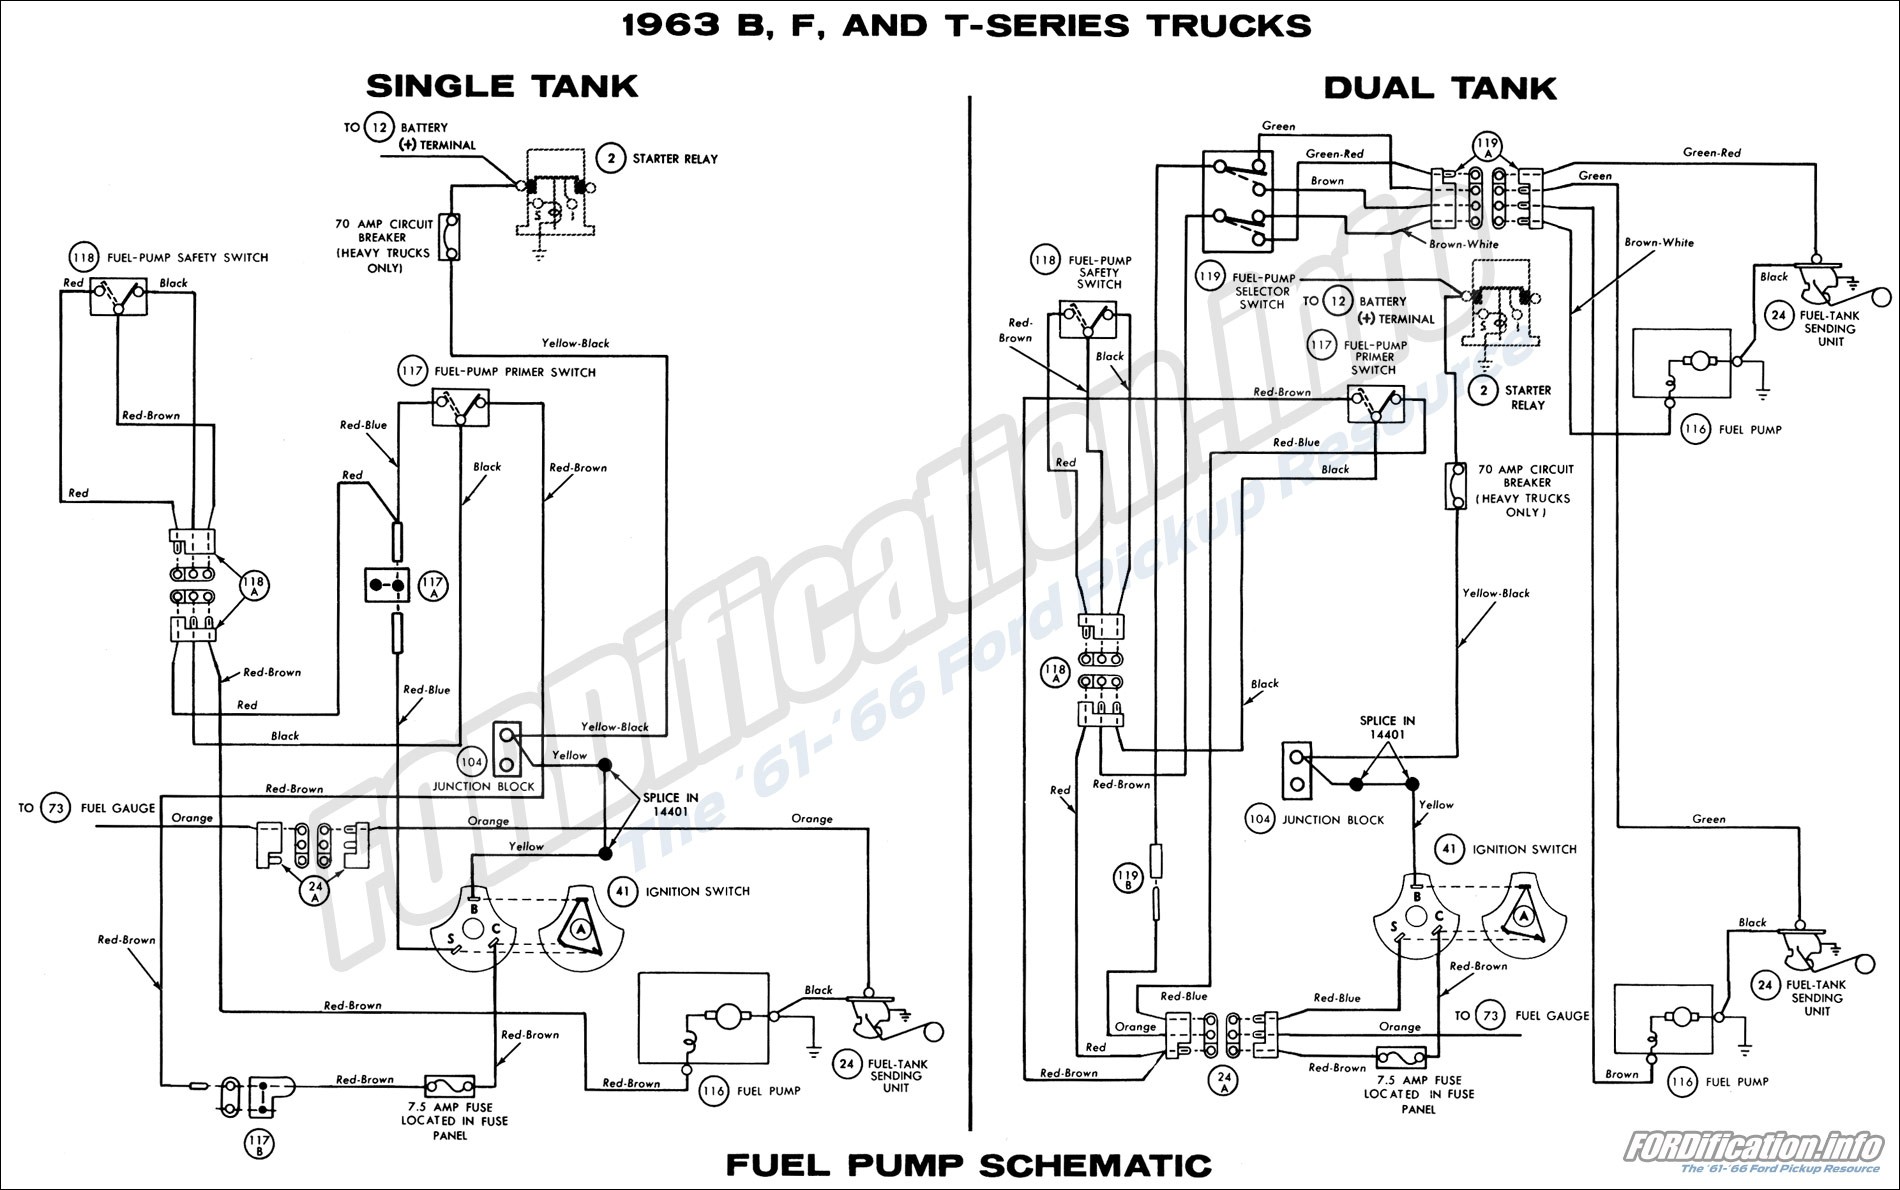 Electric Fuel Pump Schematic